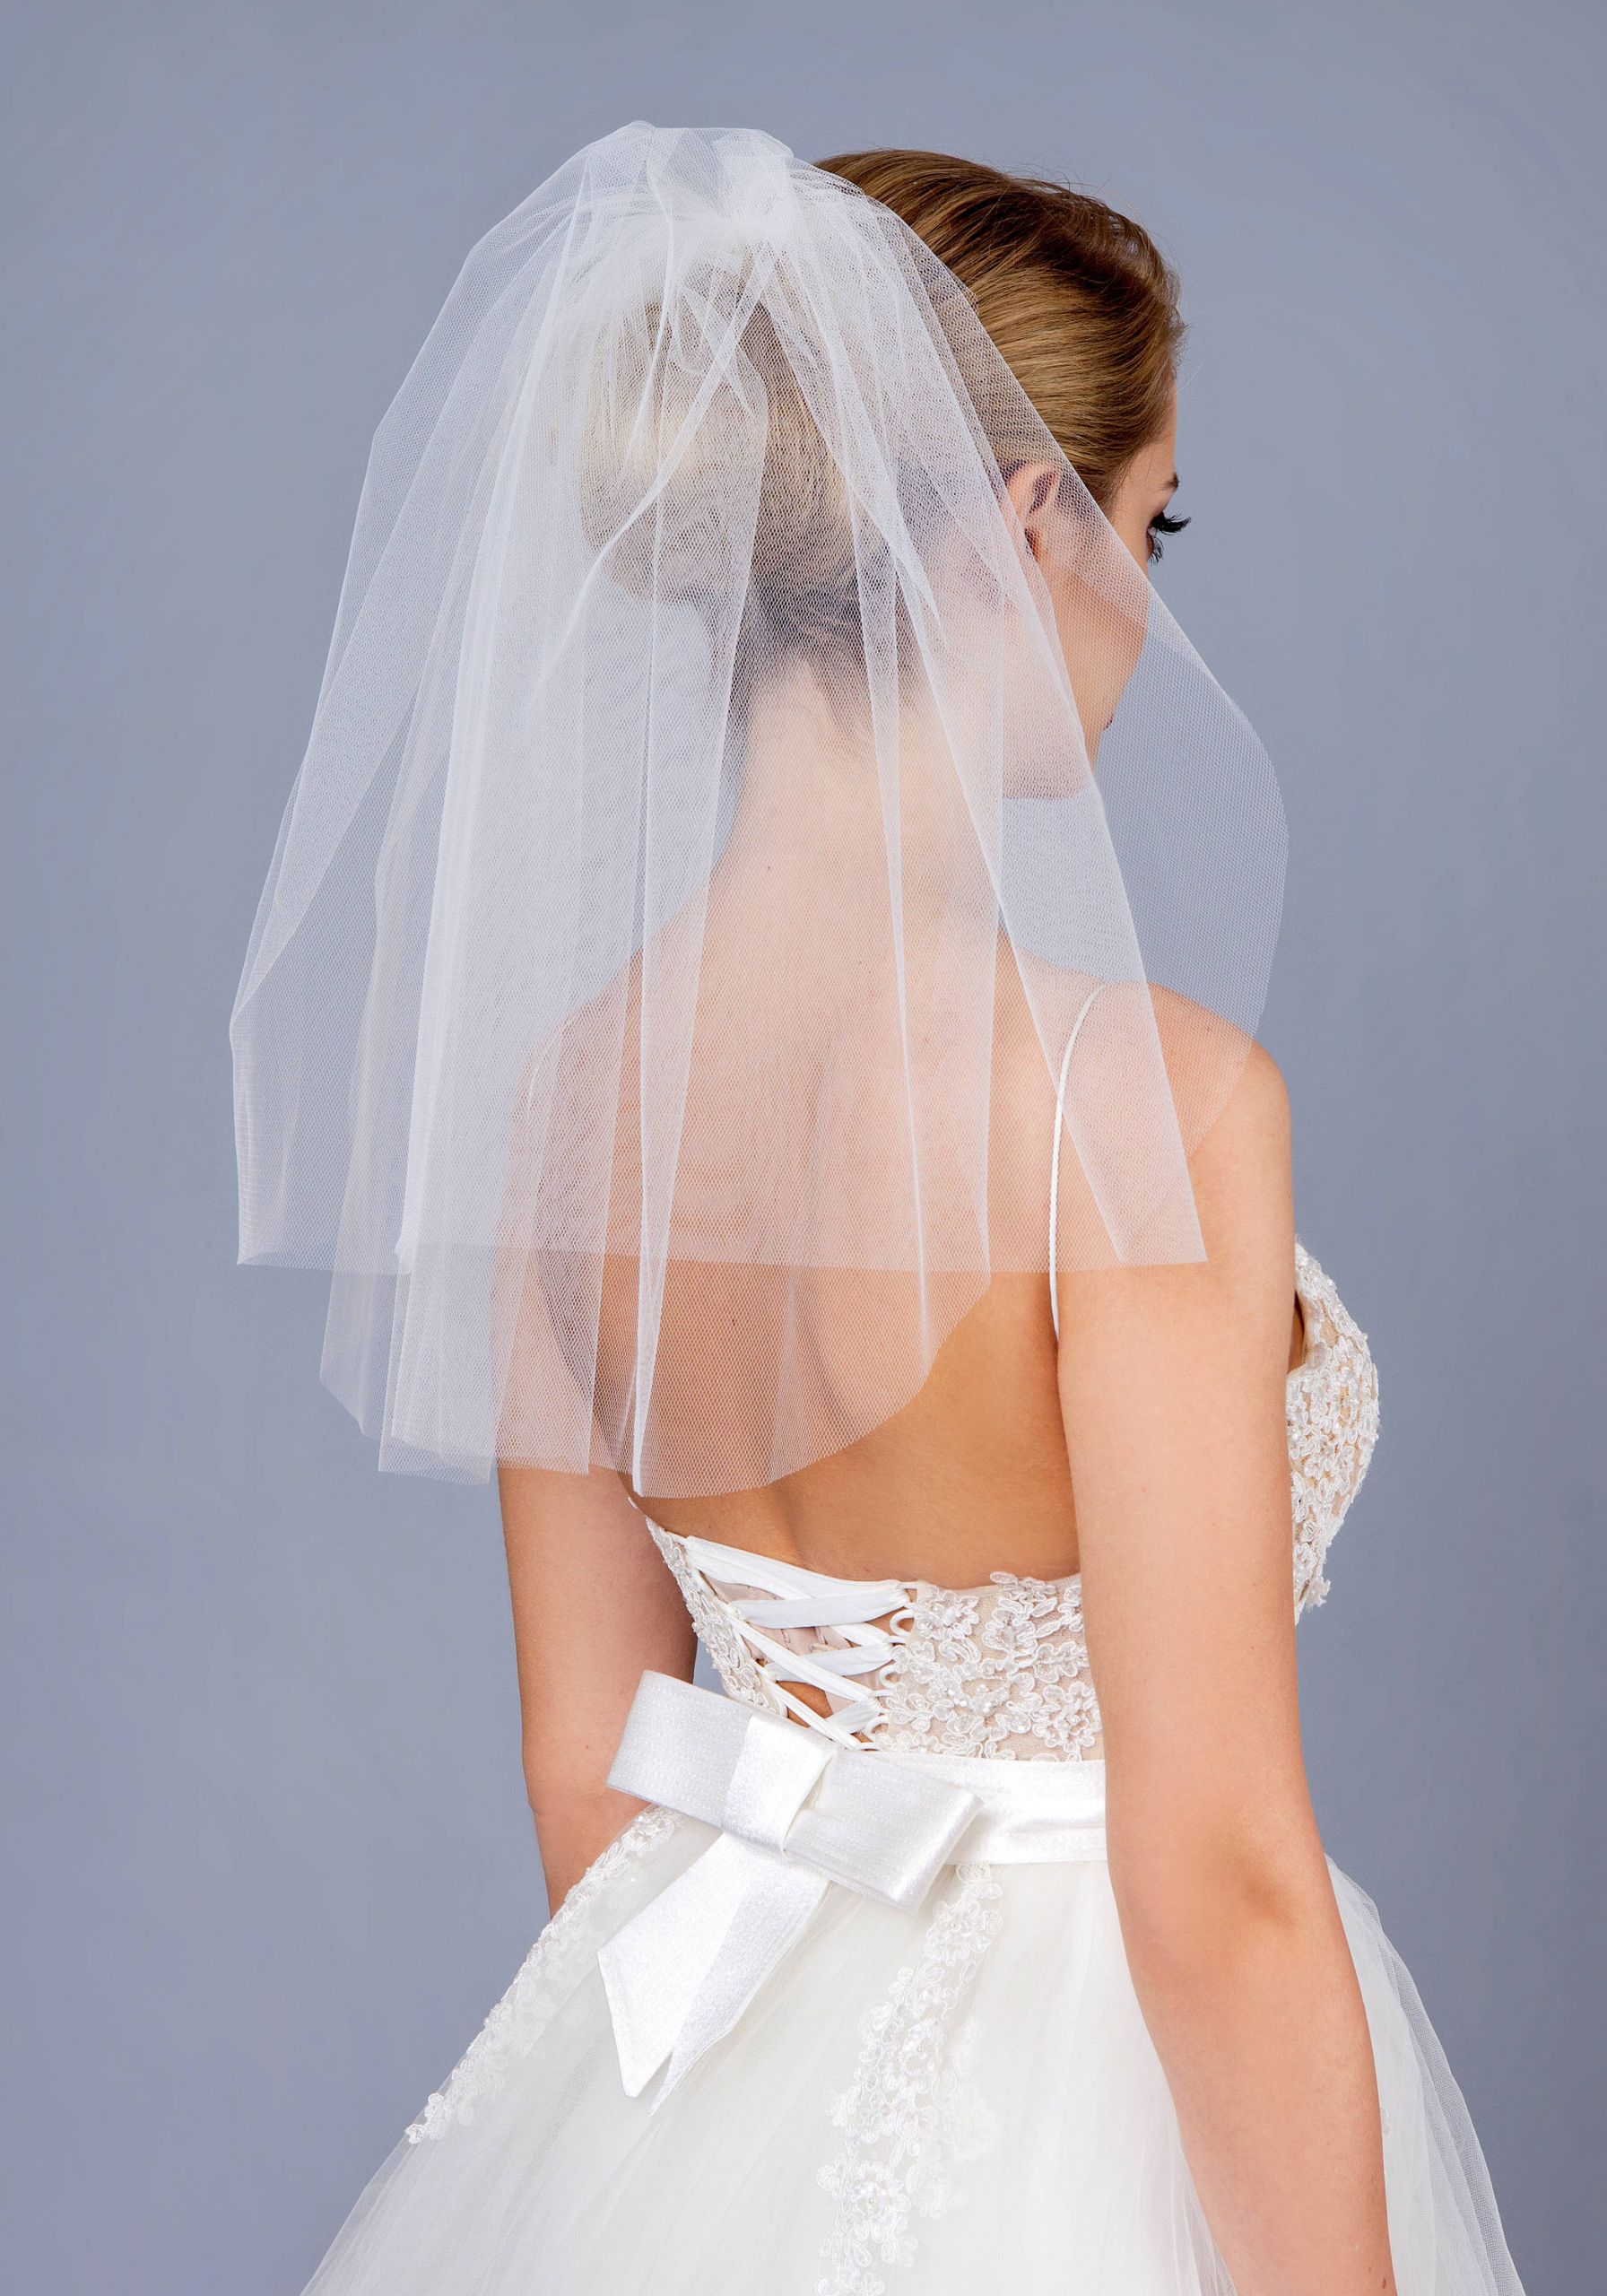 Short Ivory Wedding Veils Uk
 Shoulder Wedding Bridal Veil ivory Wedding veil Short